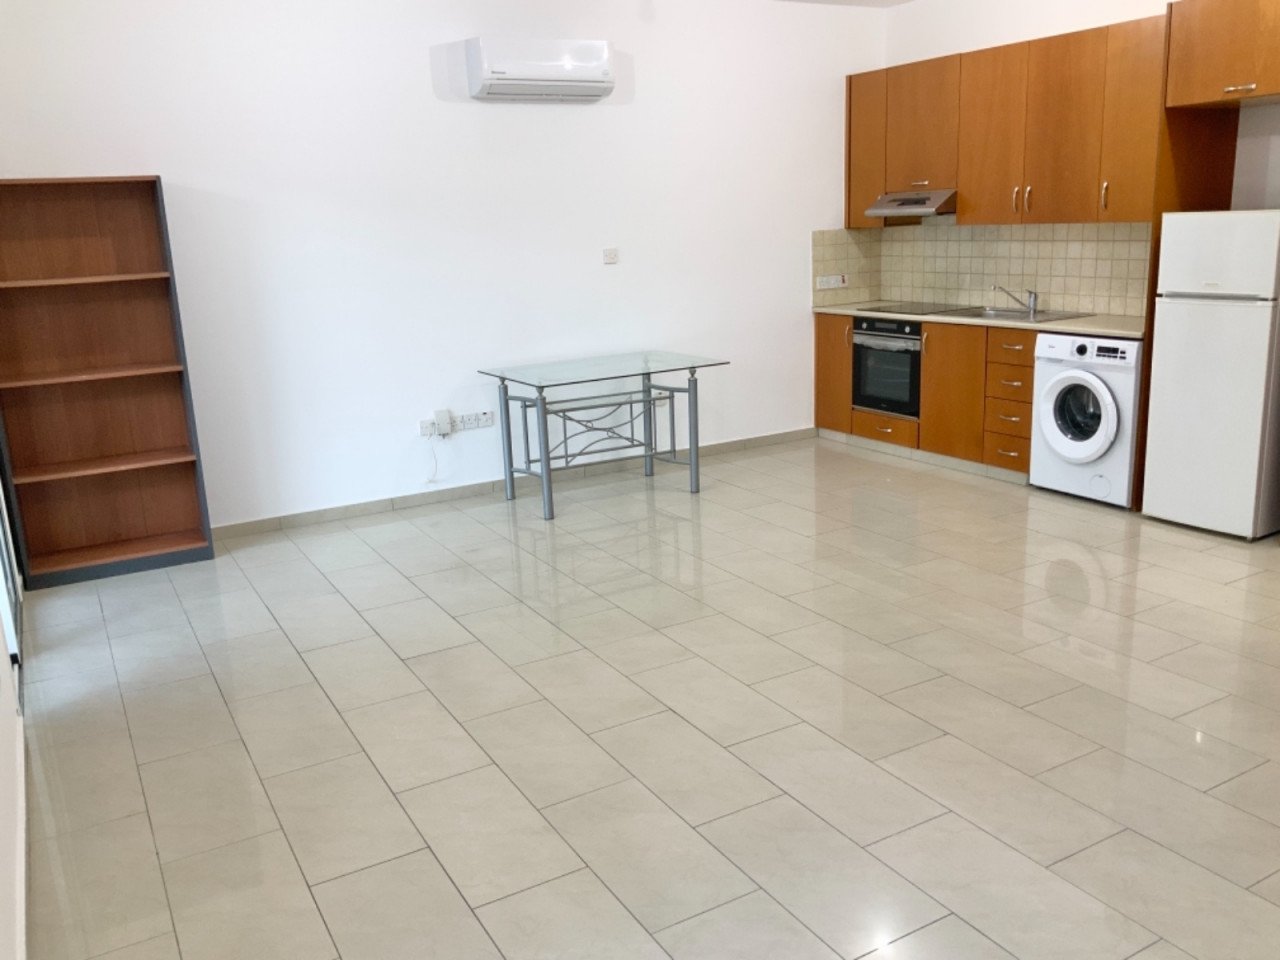 Property for Rent: Apartment (Studio) in Lykavitos, Nicosia for Rent | Key Realtor Cyprus